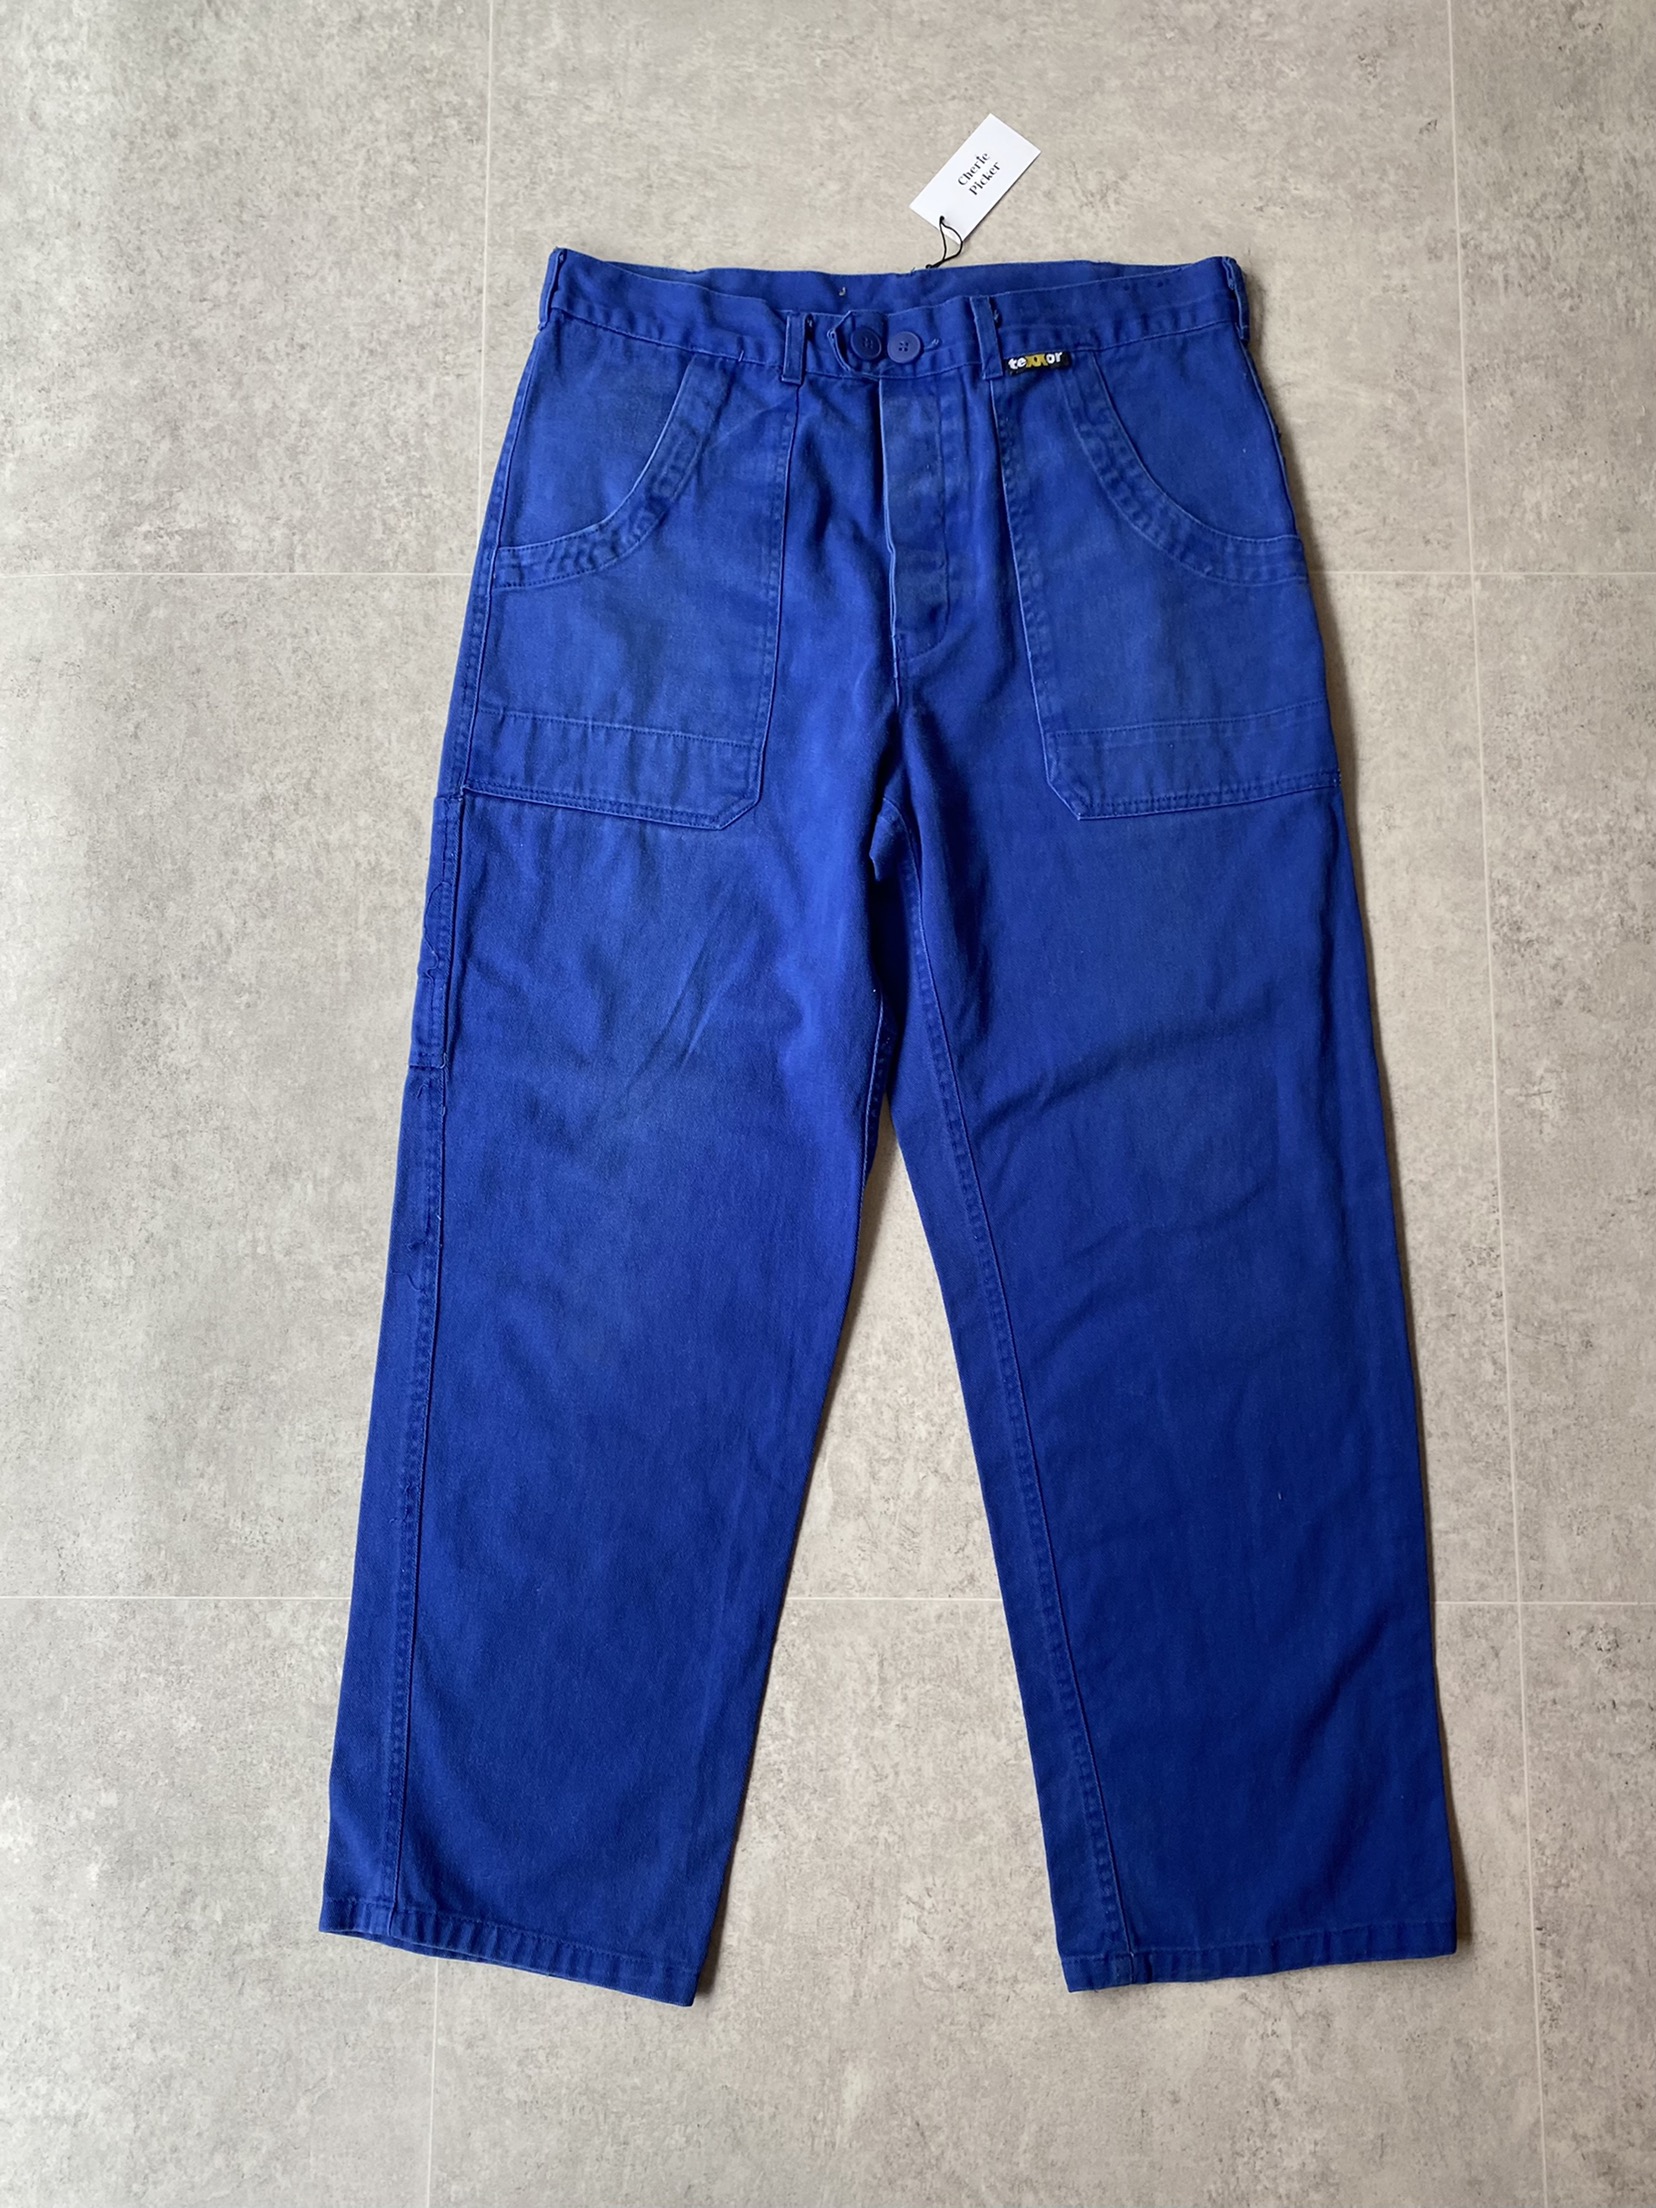 Vintage French Work Pants 32~33 Size - 체리피커